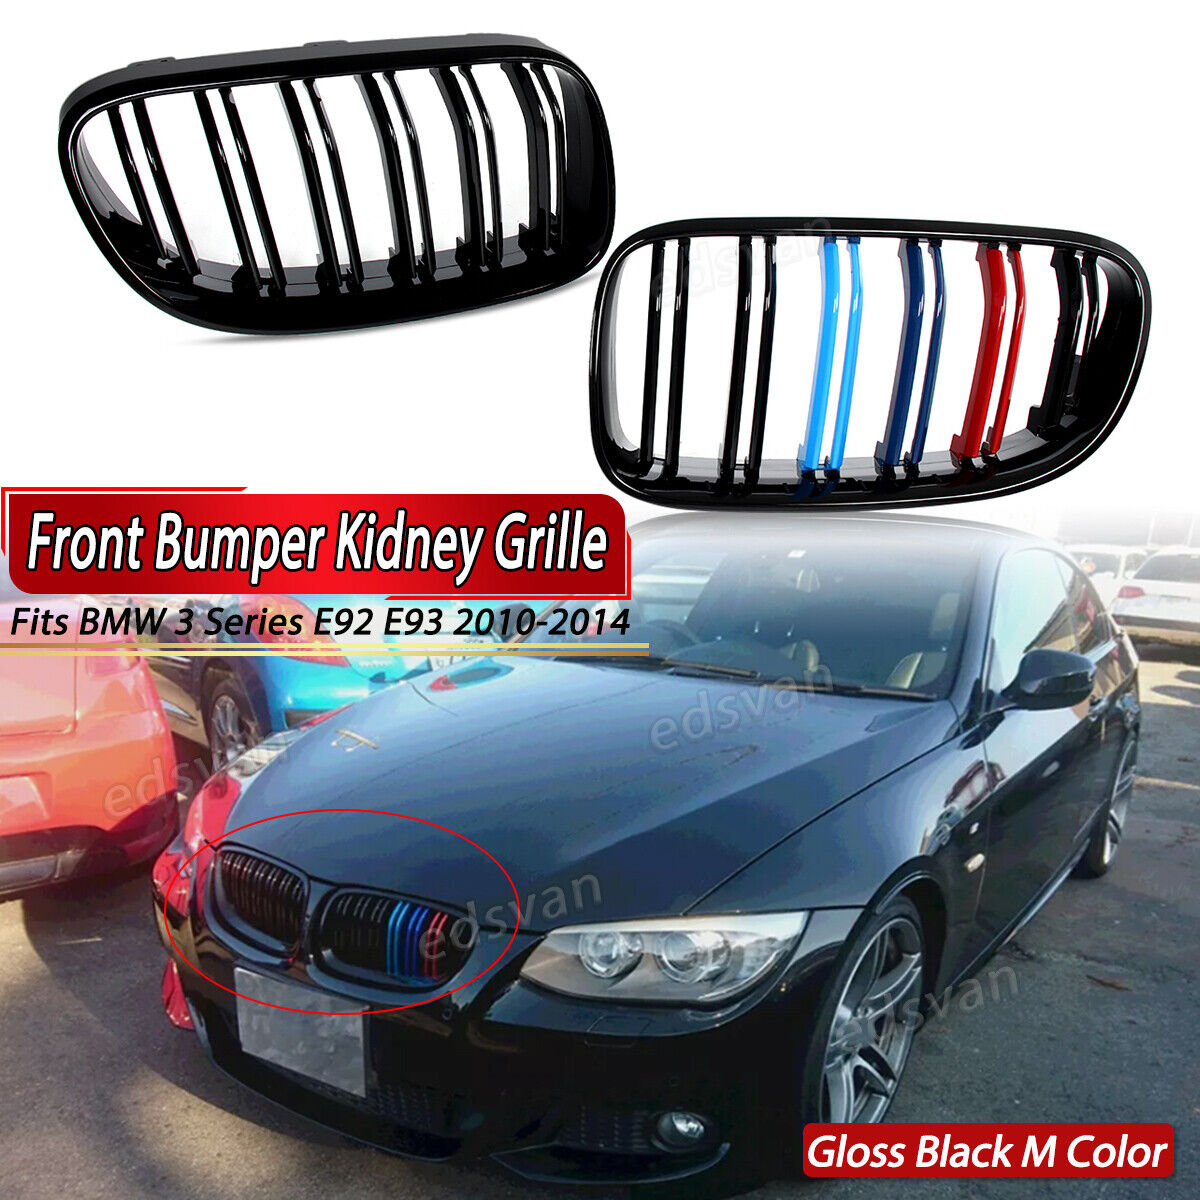 Glossy Black M-Color Front Kidney Grille For BMW E92 E93 325i 335i LCI 2010-2014